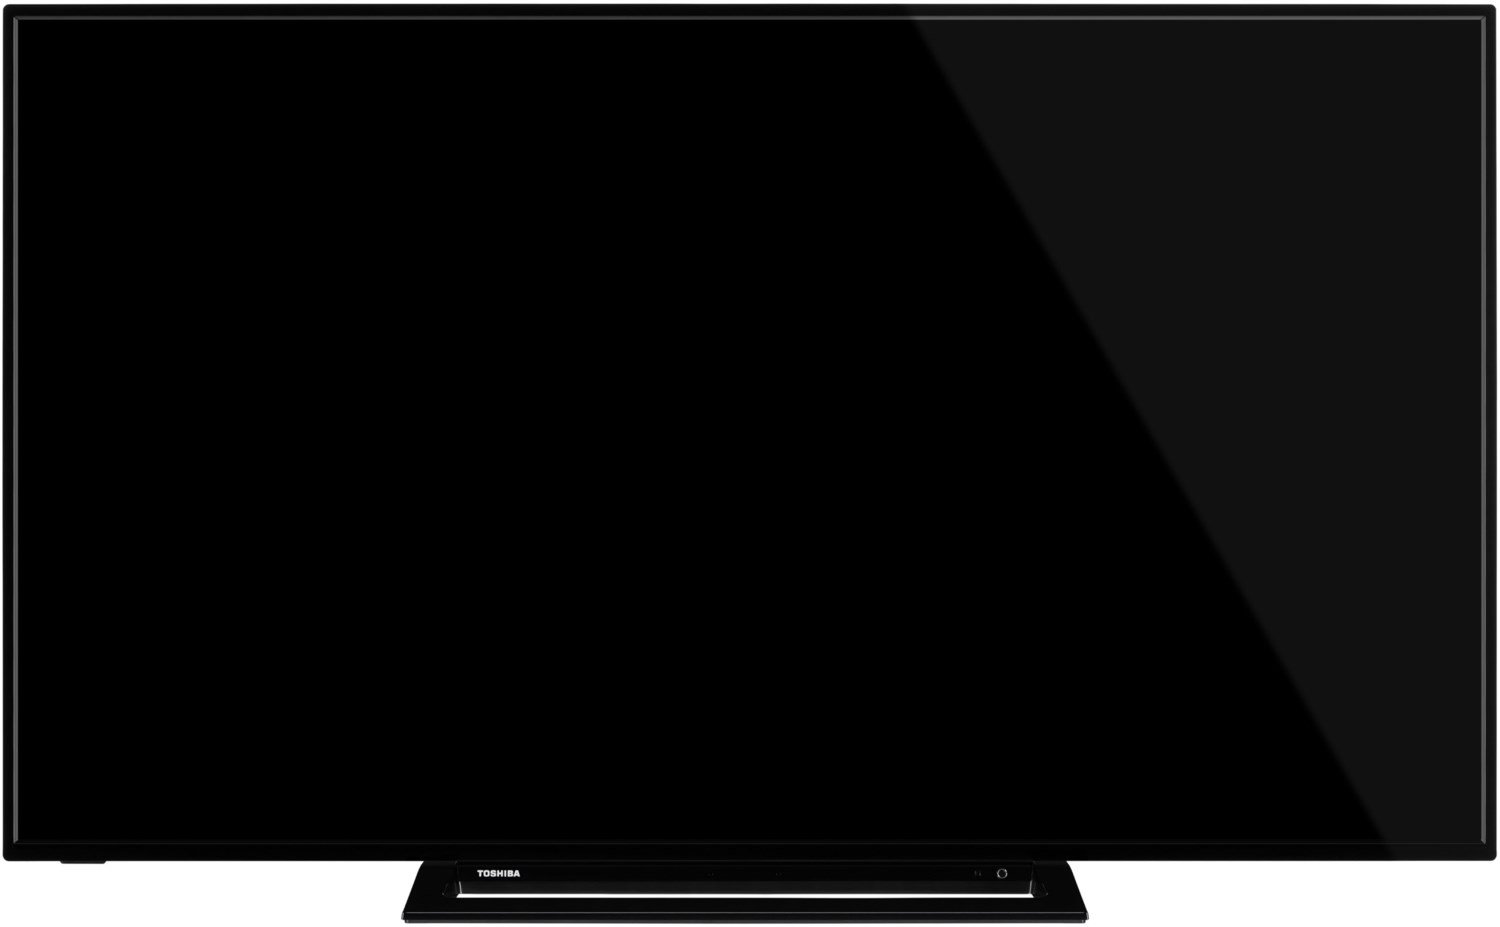 55UK3163DG 139 cm (55) LCD-TV mit LED-Technik schwarz / G